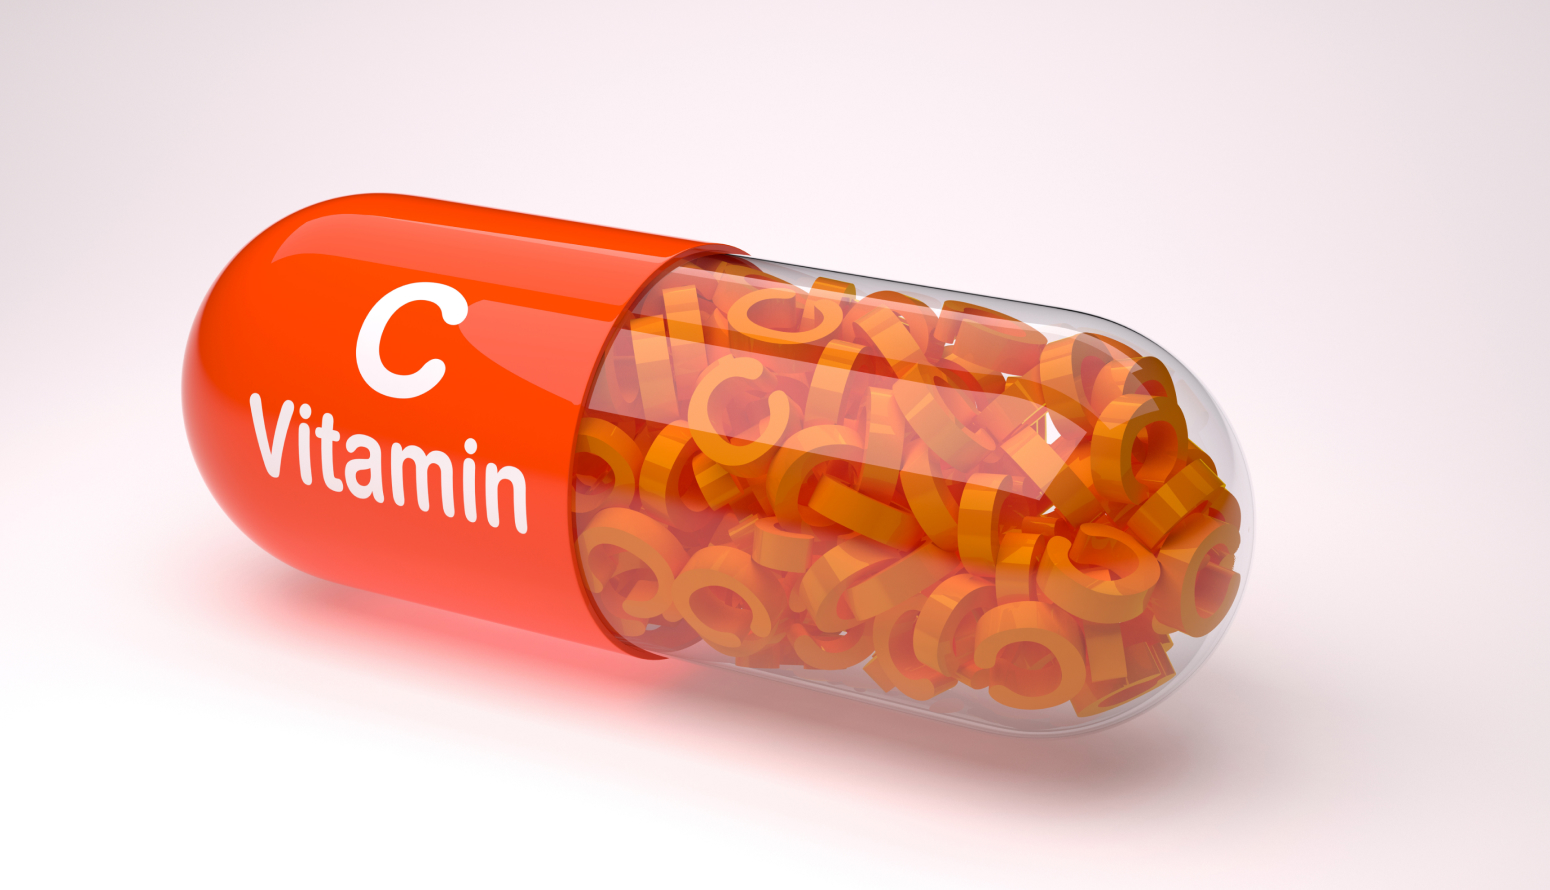 Multivitamin supplements